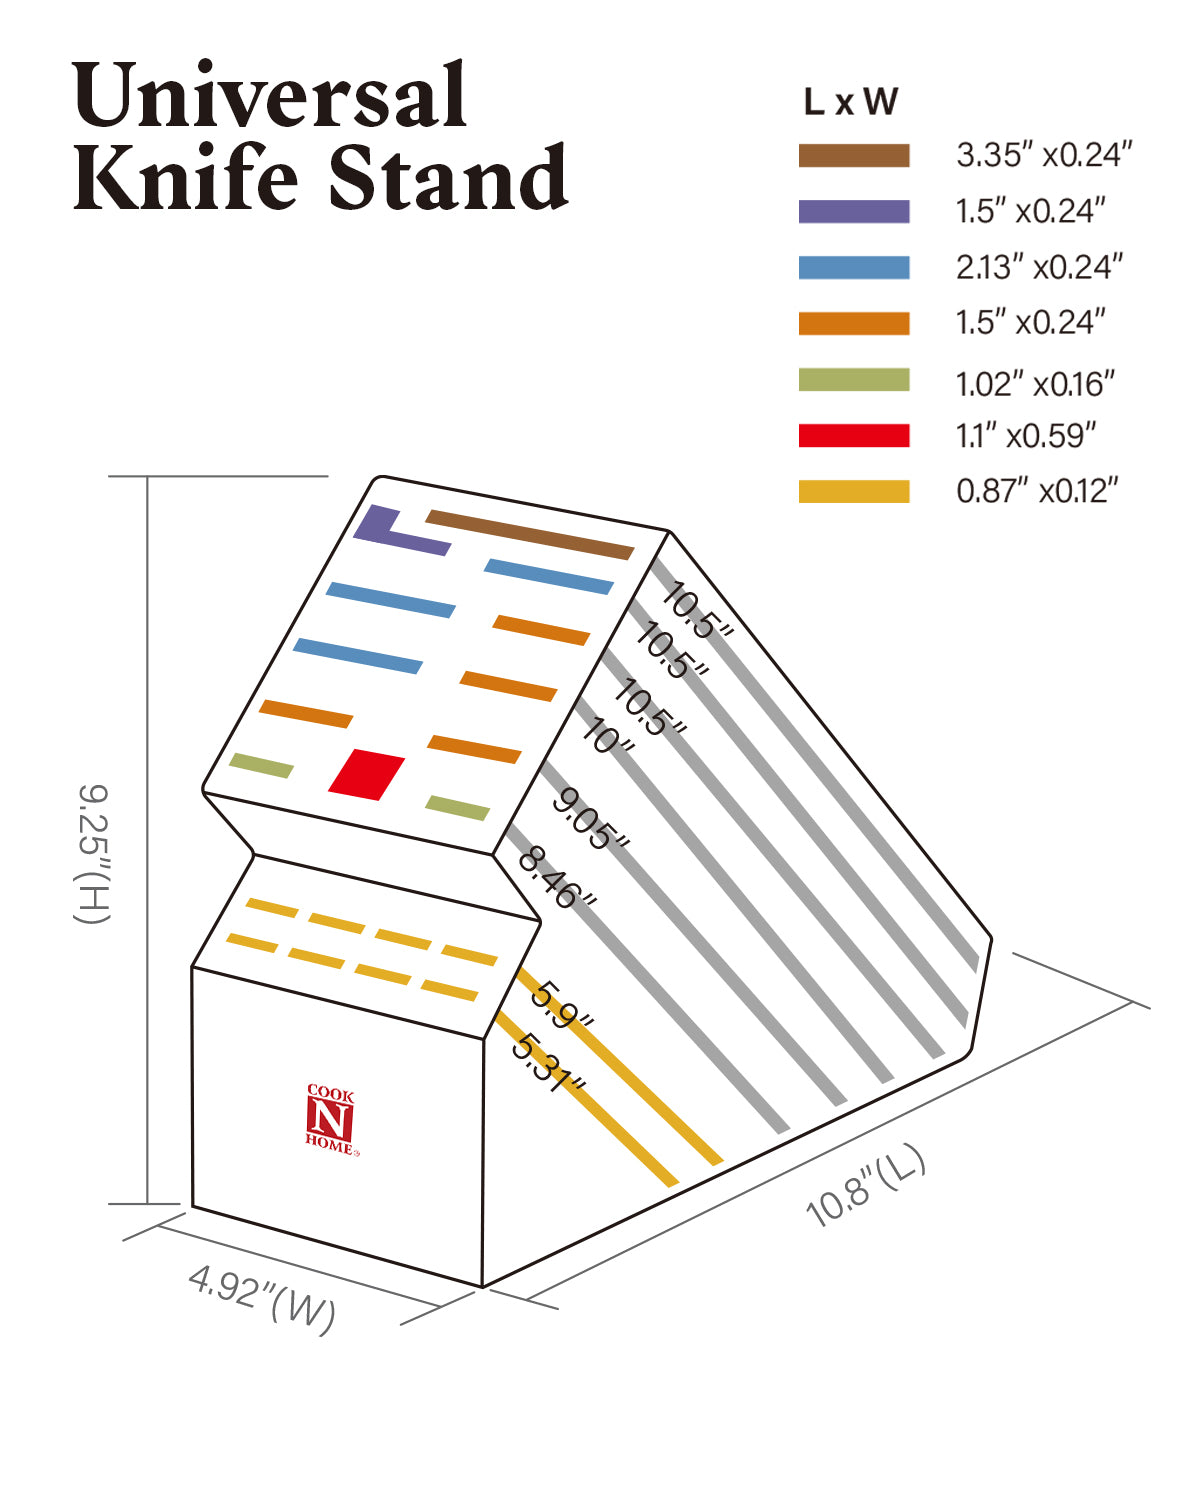 Reclaimed Wood Angled Rectangular Knife Block – Be Home